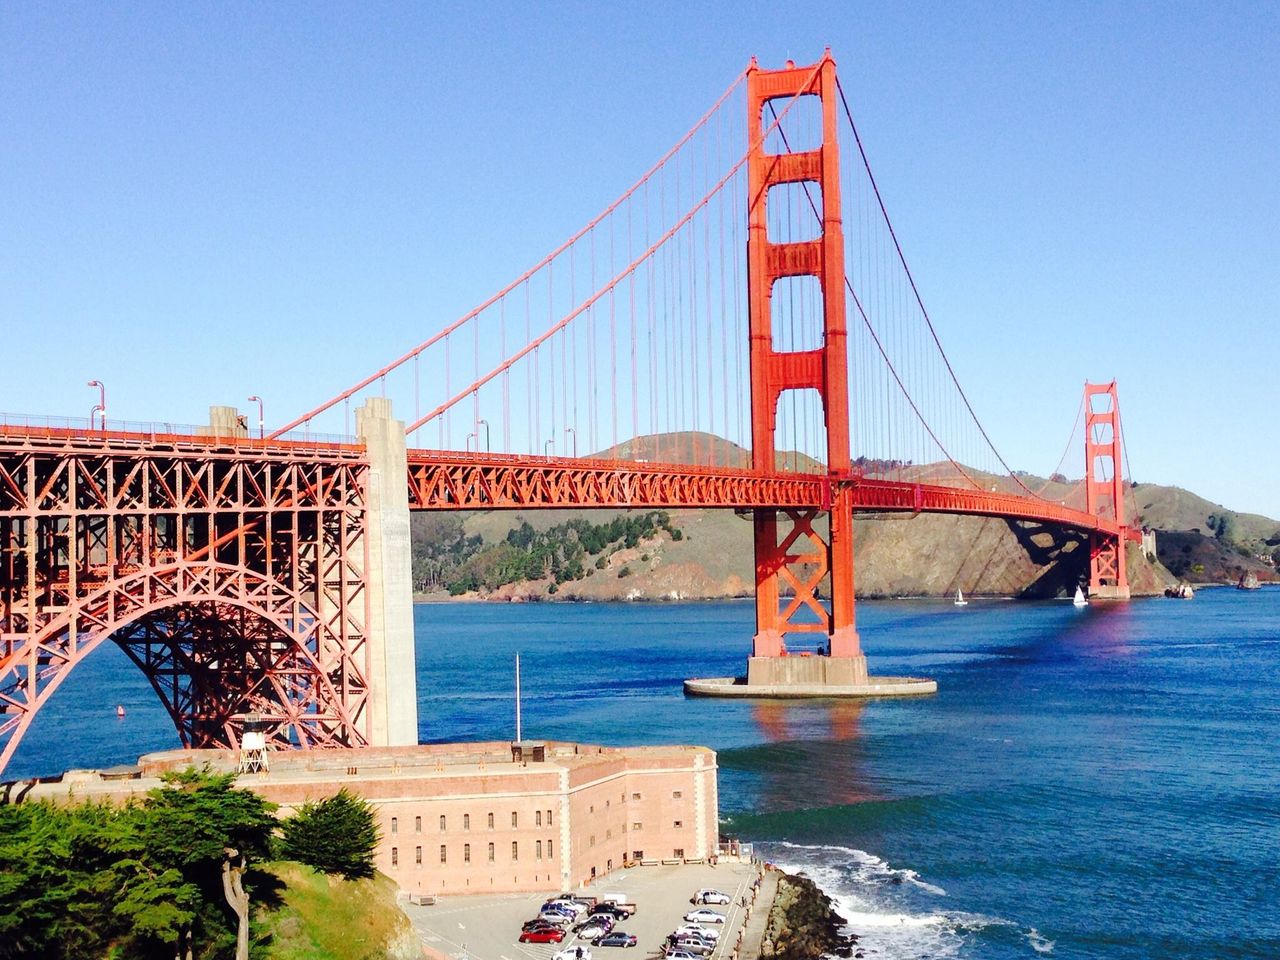 Walking across the Golden Gate Bridge